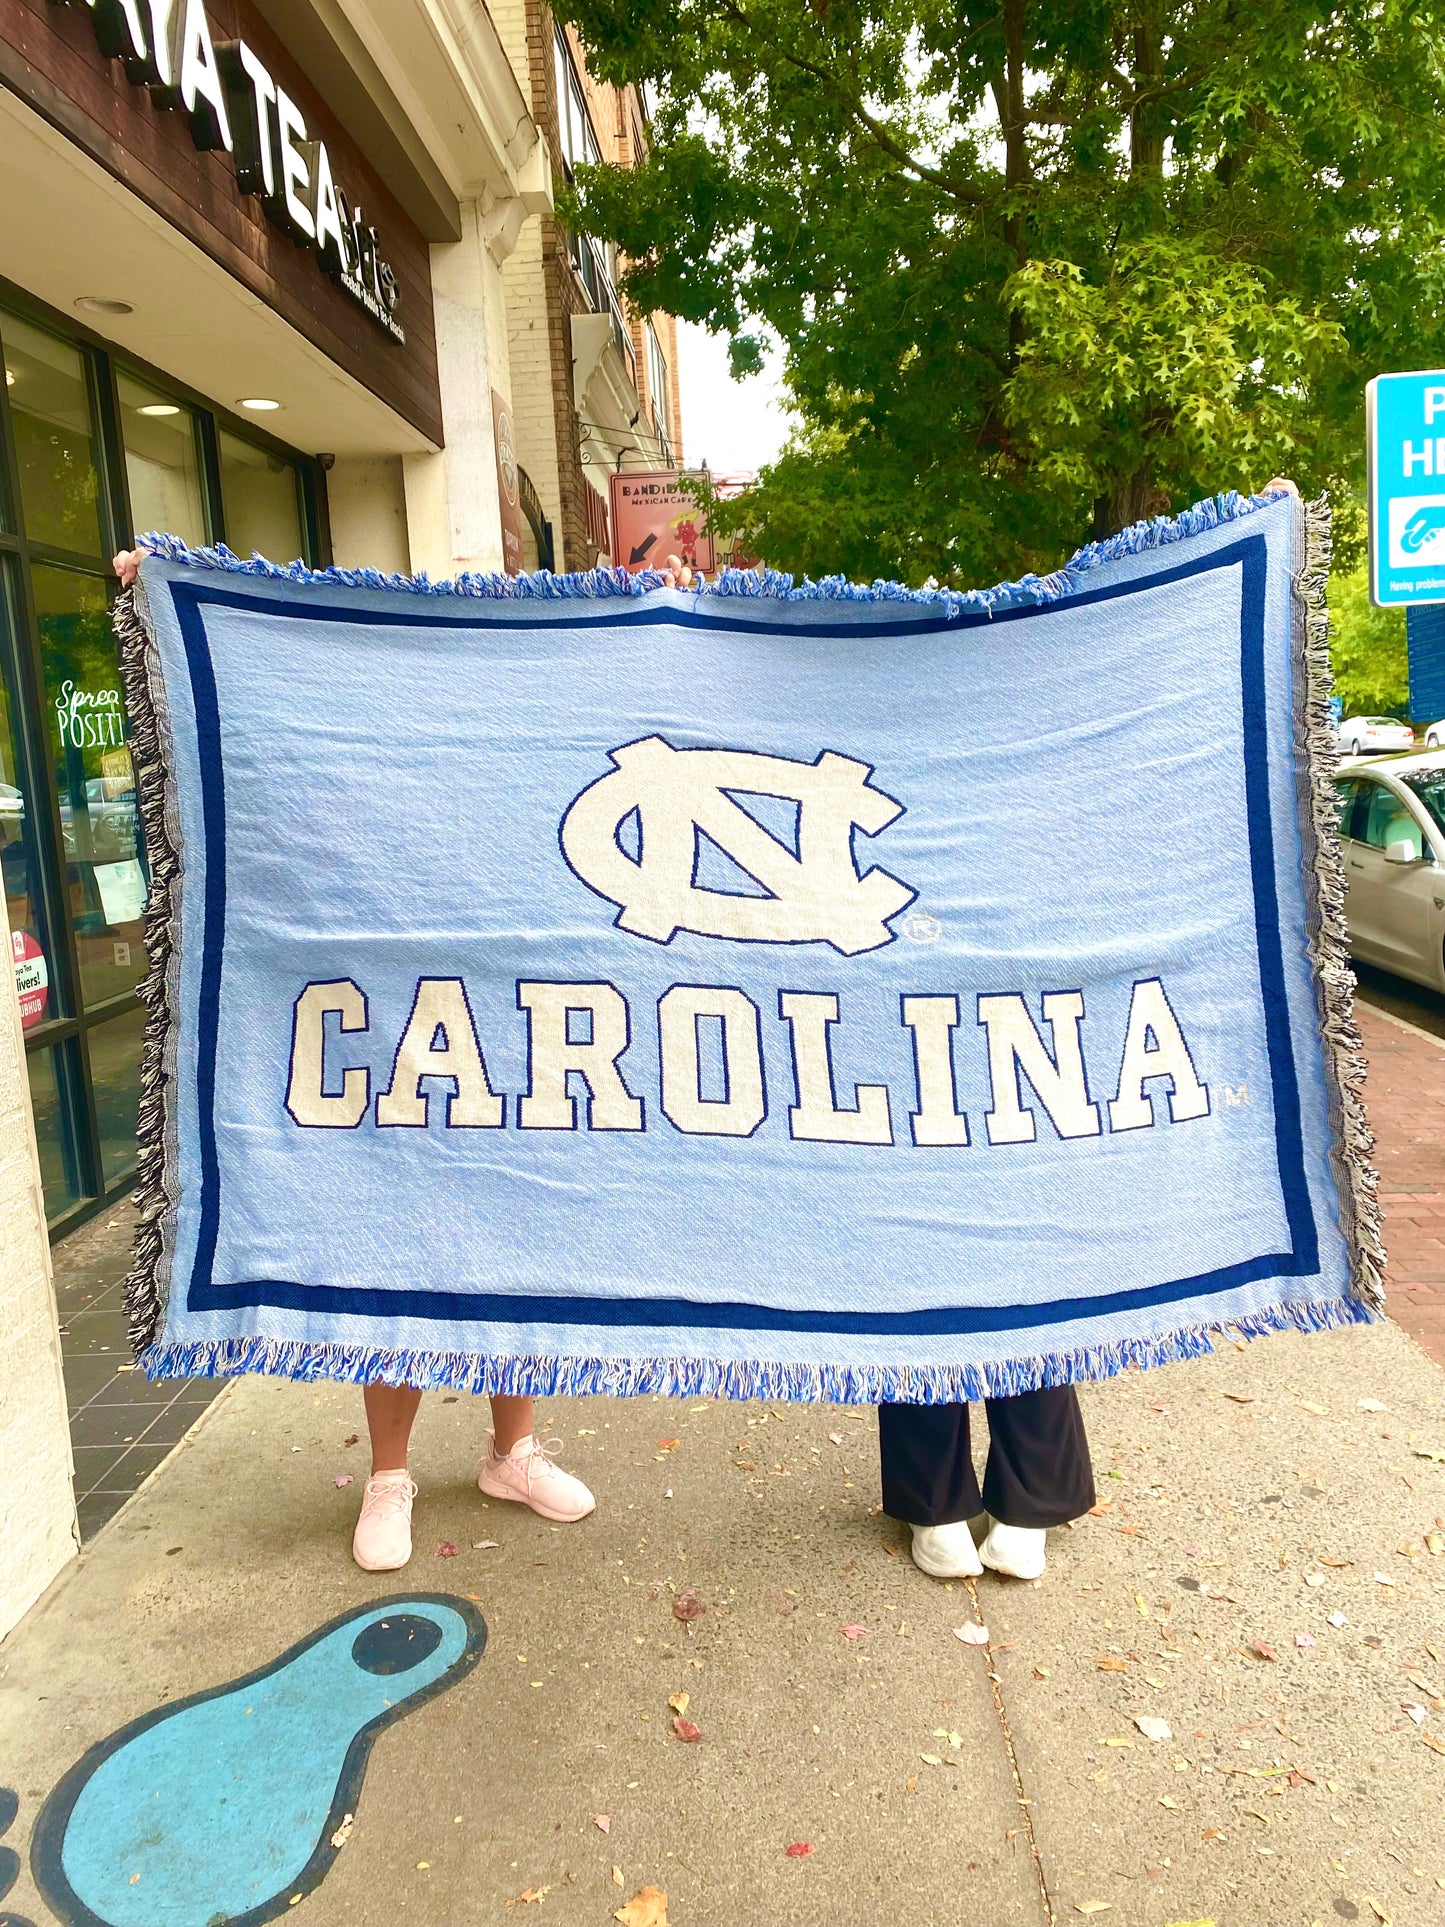 Carolina Blue UNC Interlock Tapestry Blanket